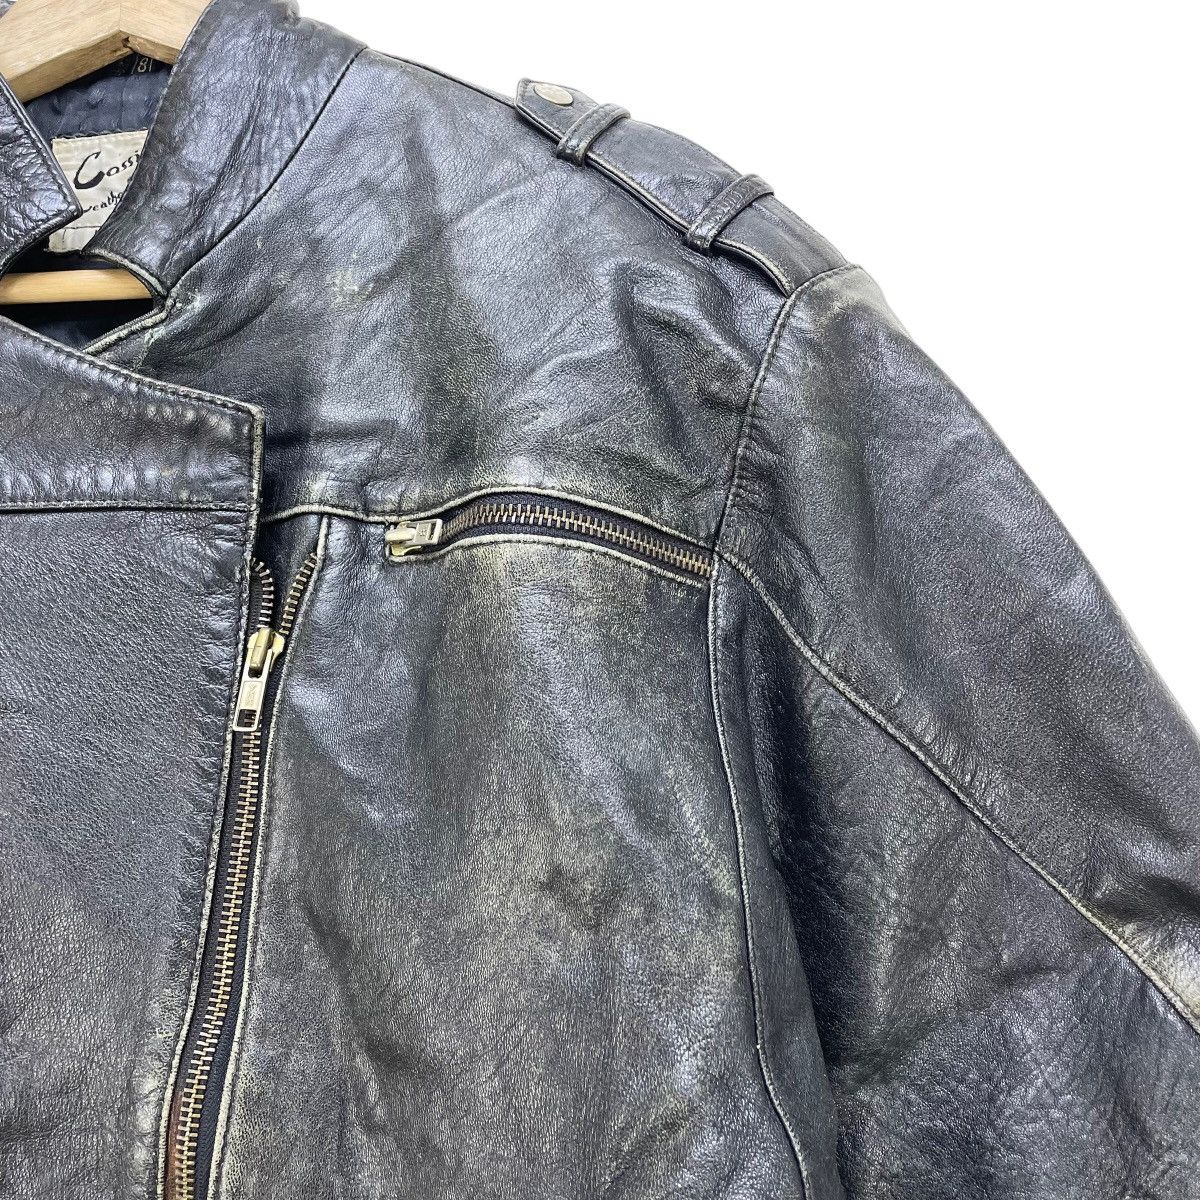 Vintage Genuine Leather Jacket Made In Turkey - 5